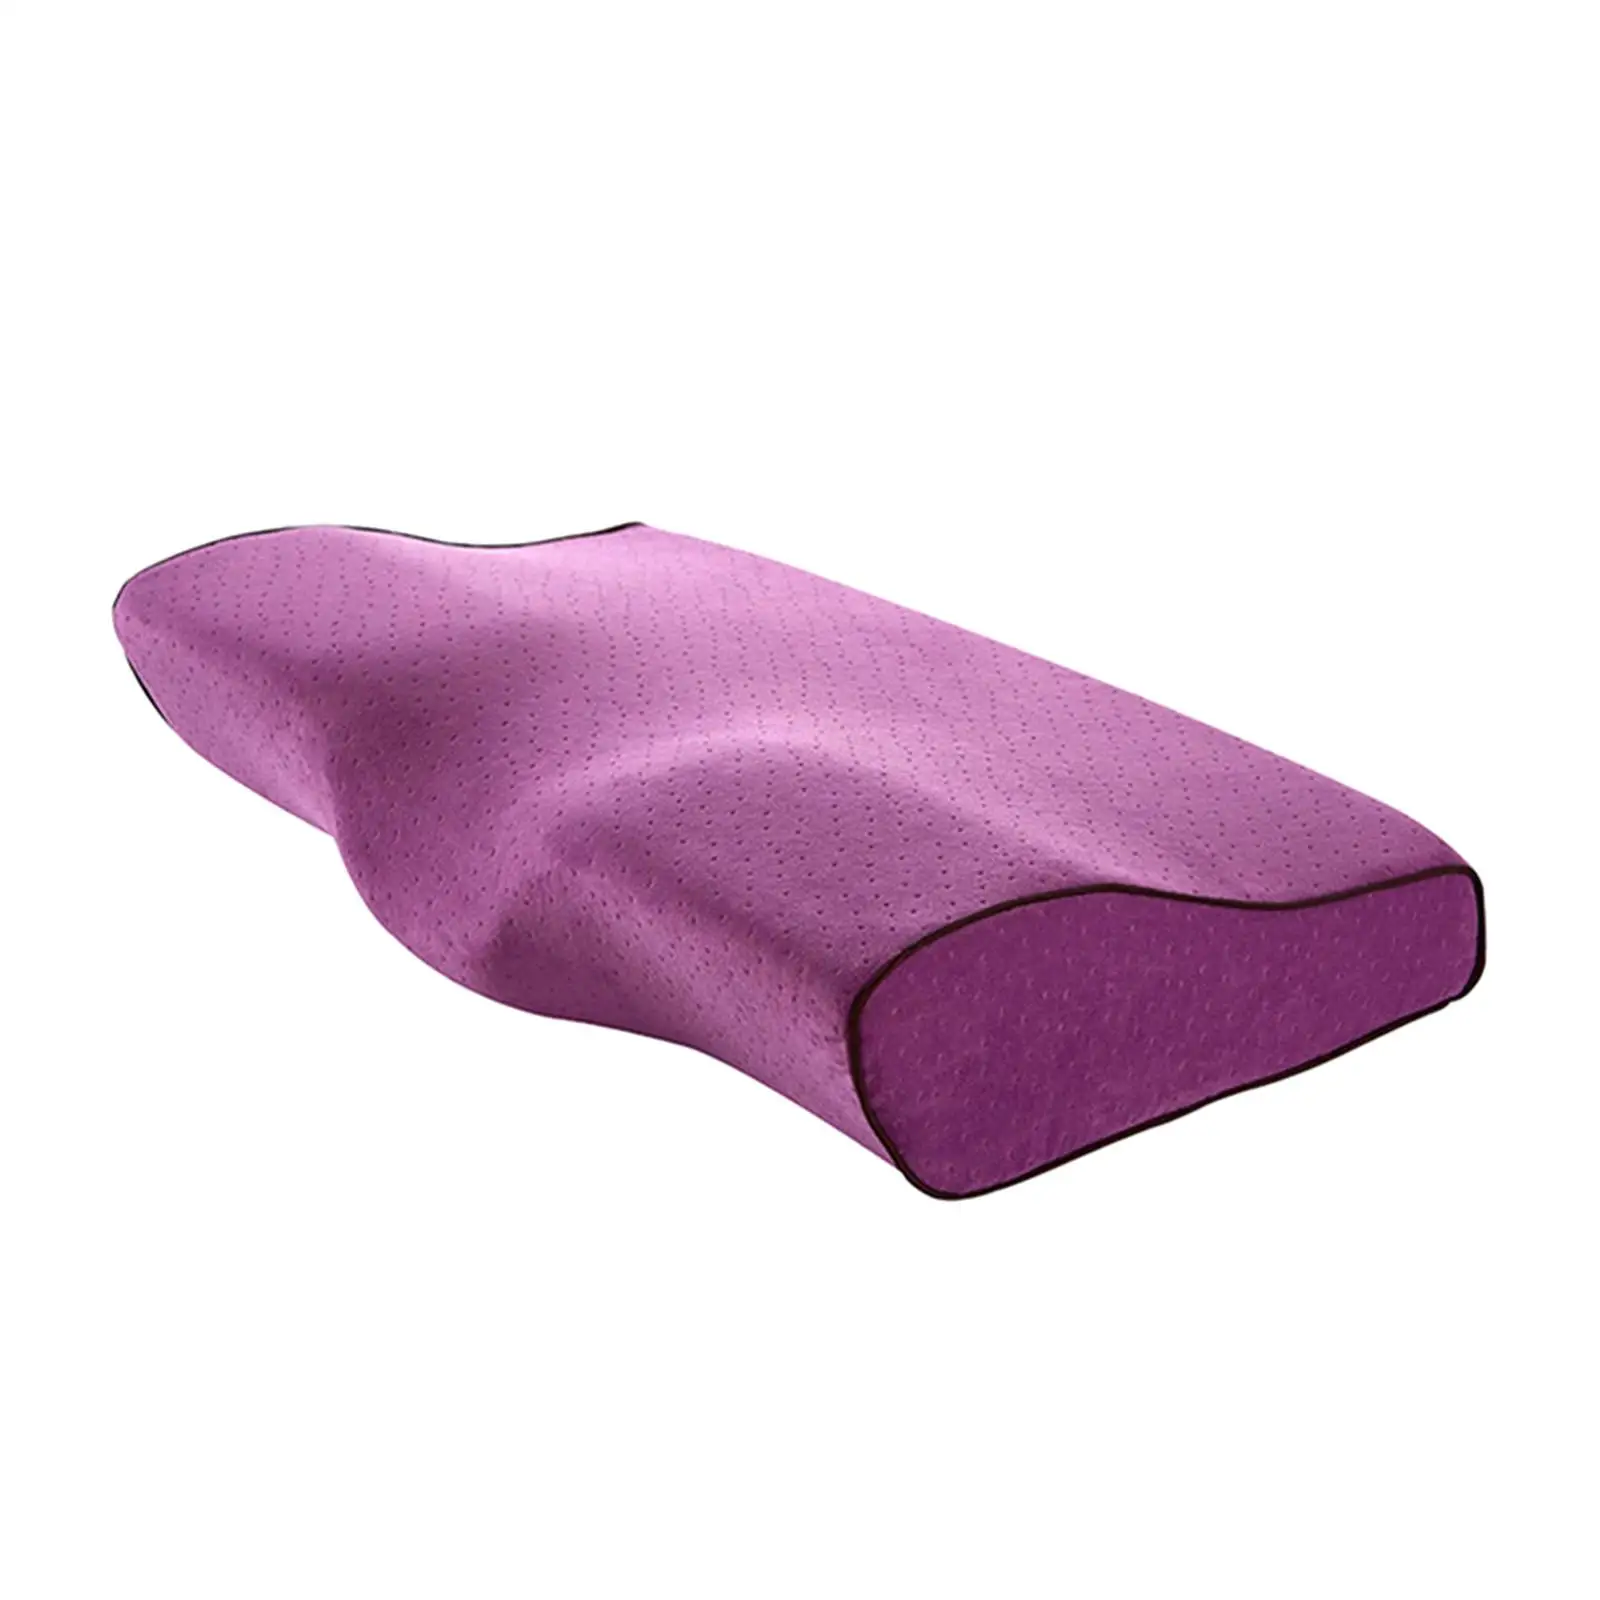 Memory Foam Pillow Pillows Sleep Cervical Pillows for Brings Good Sleep Guys